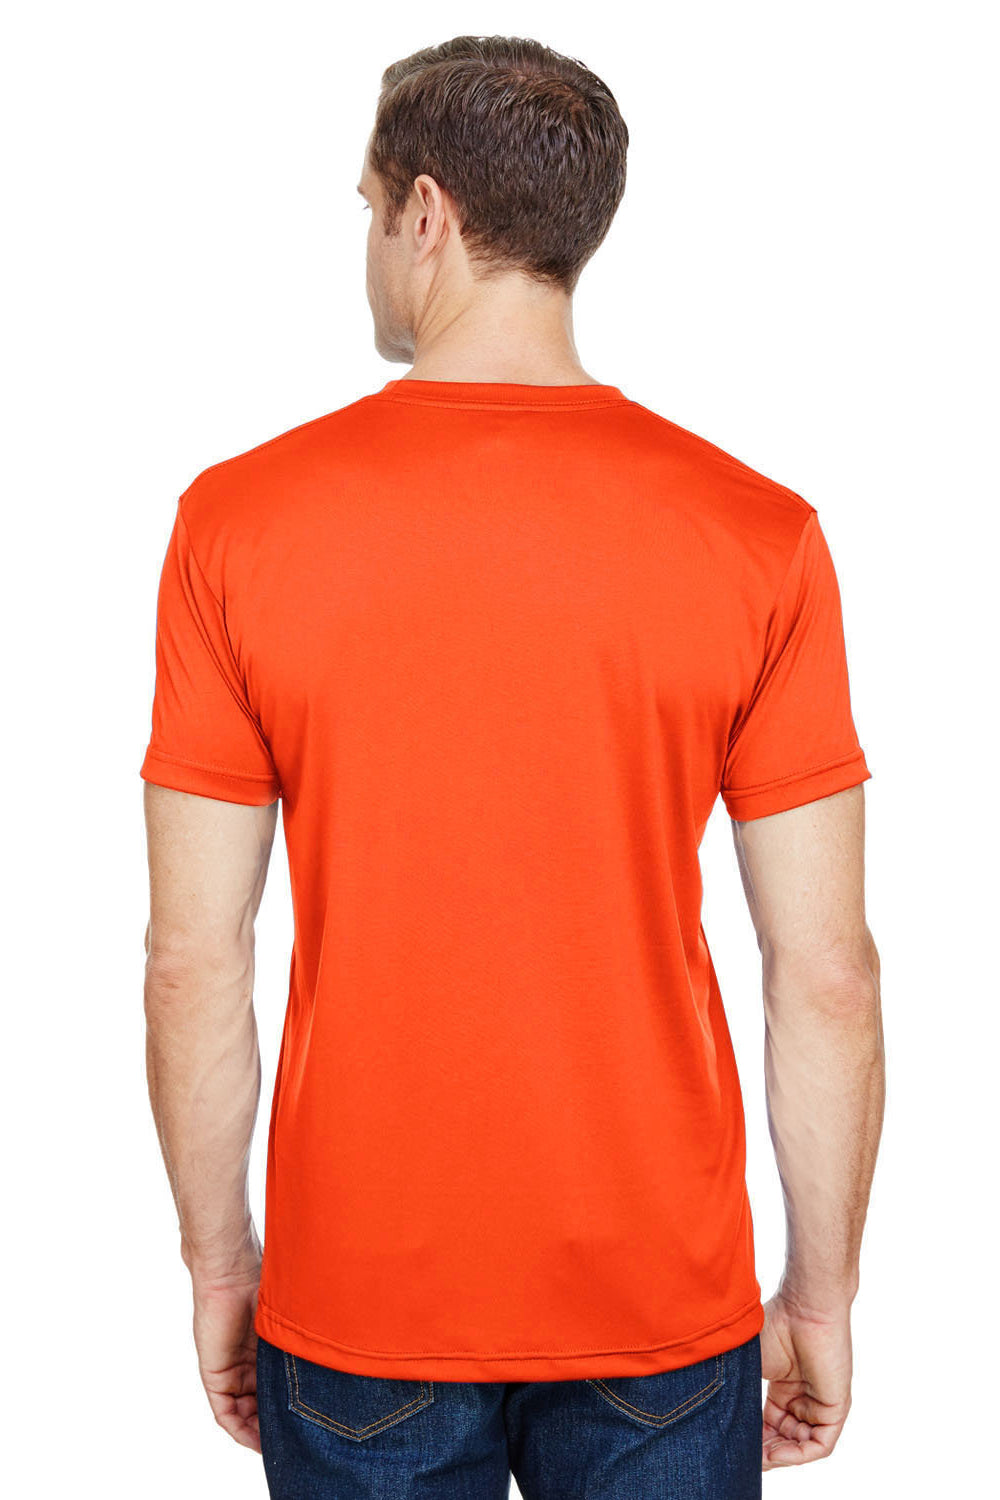 Bayside 5300 Mens USA Made Performance Short Sleeve Crewneck T-Shirt Bright Orange Model Back